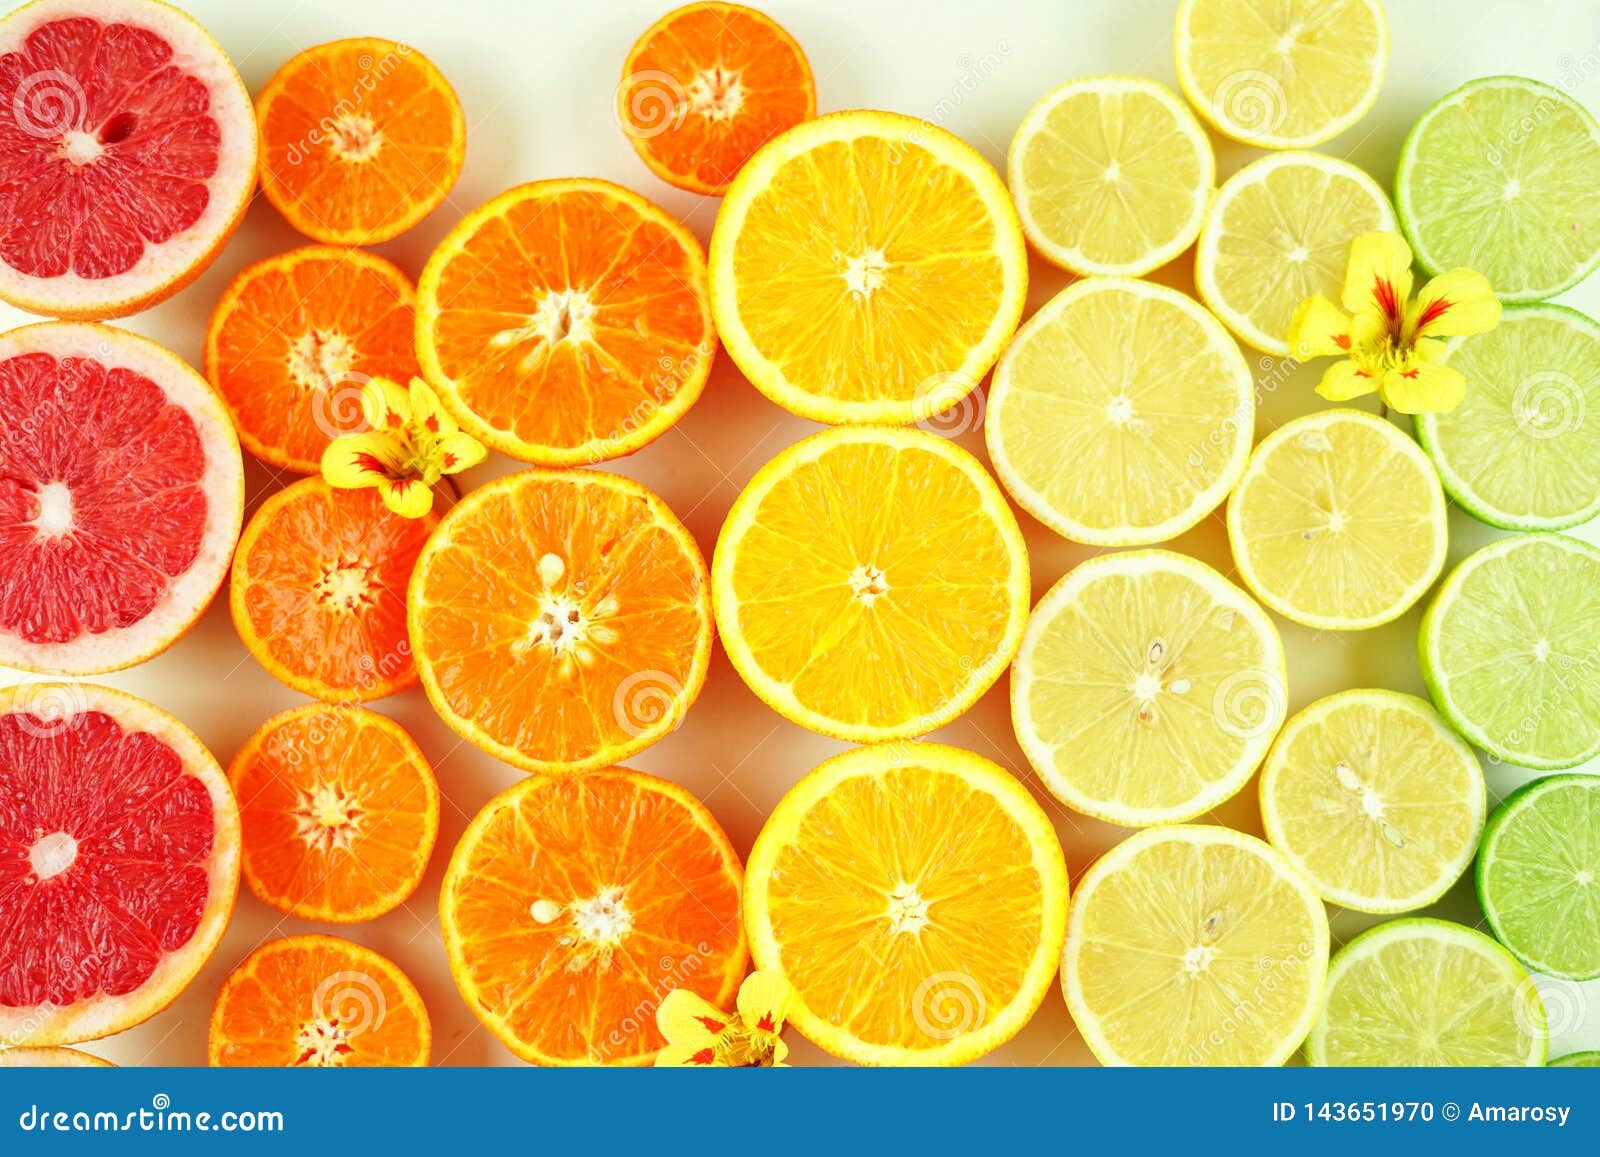 Citrus Fruit Including Blood Grapefruit Mandarins Oranges Lemons And Limes Stock Photo Image Of Ingredient Diet